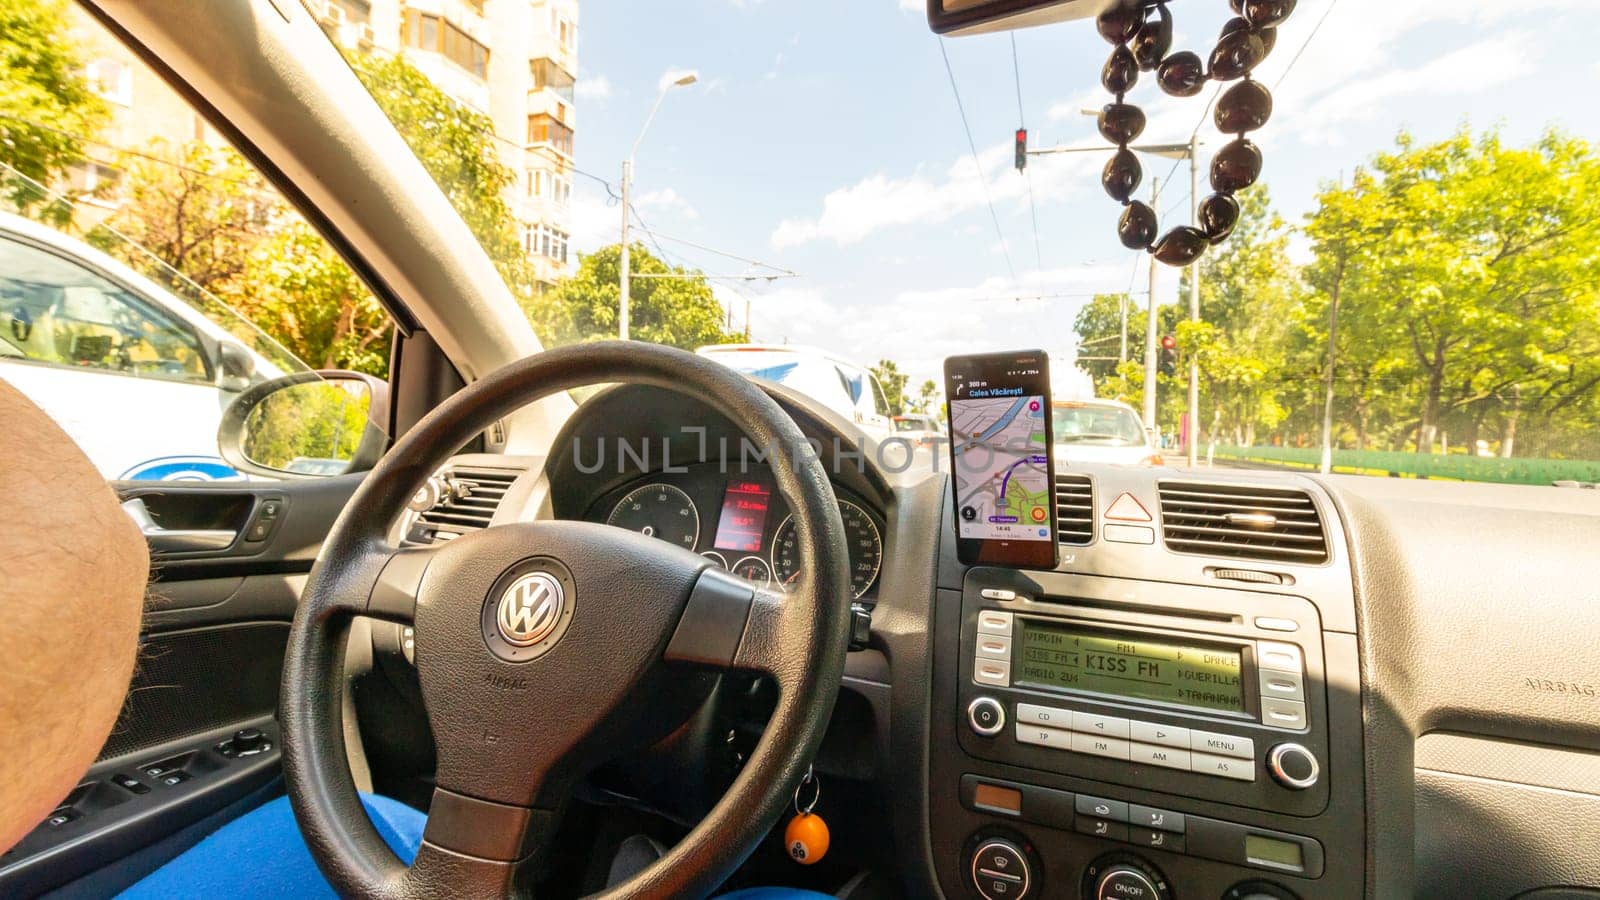 Smartphone showing Waze maps to show the way thru the city by vladispas